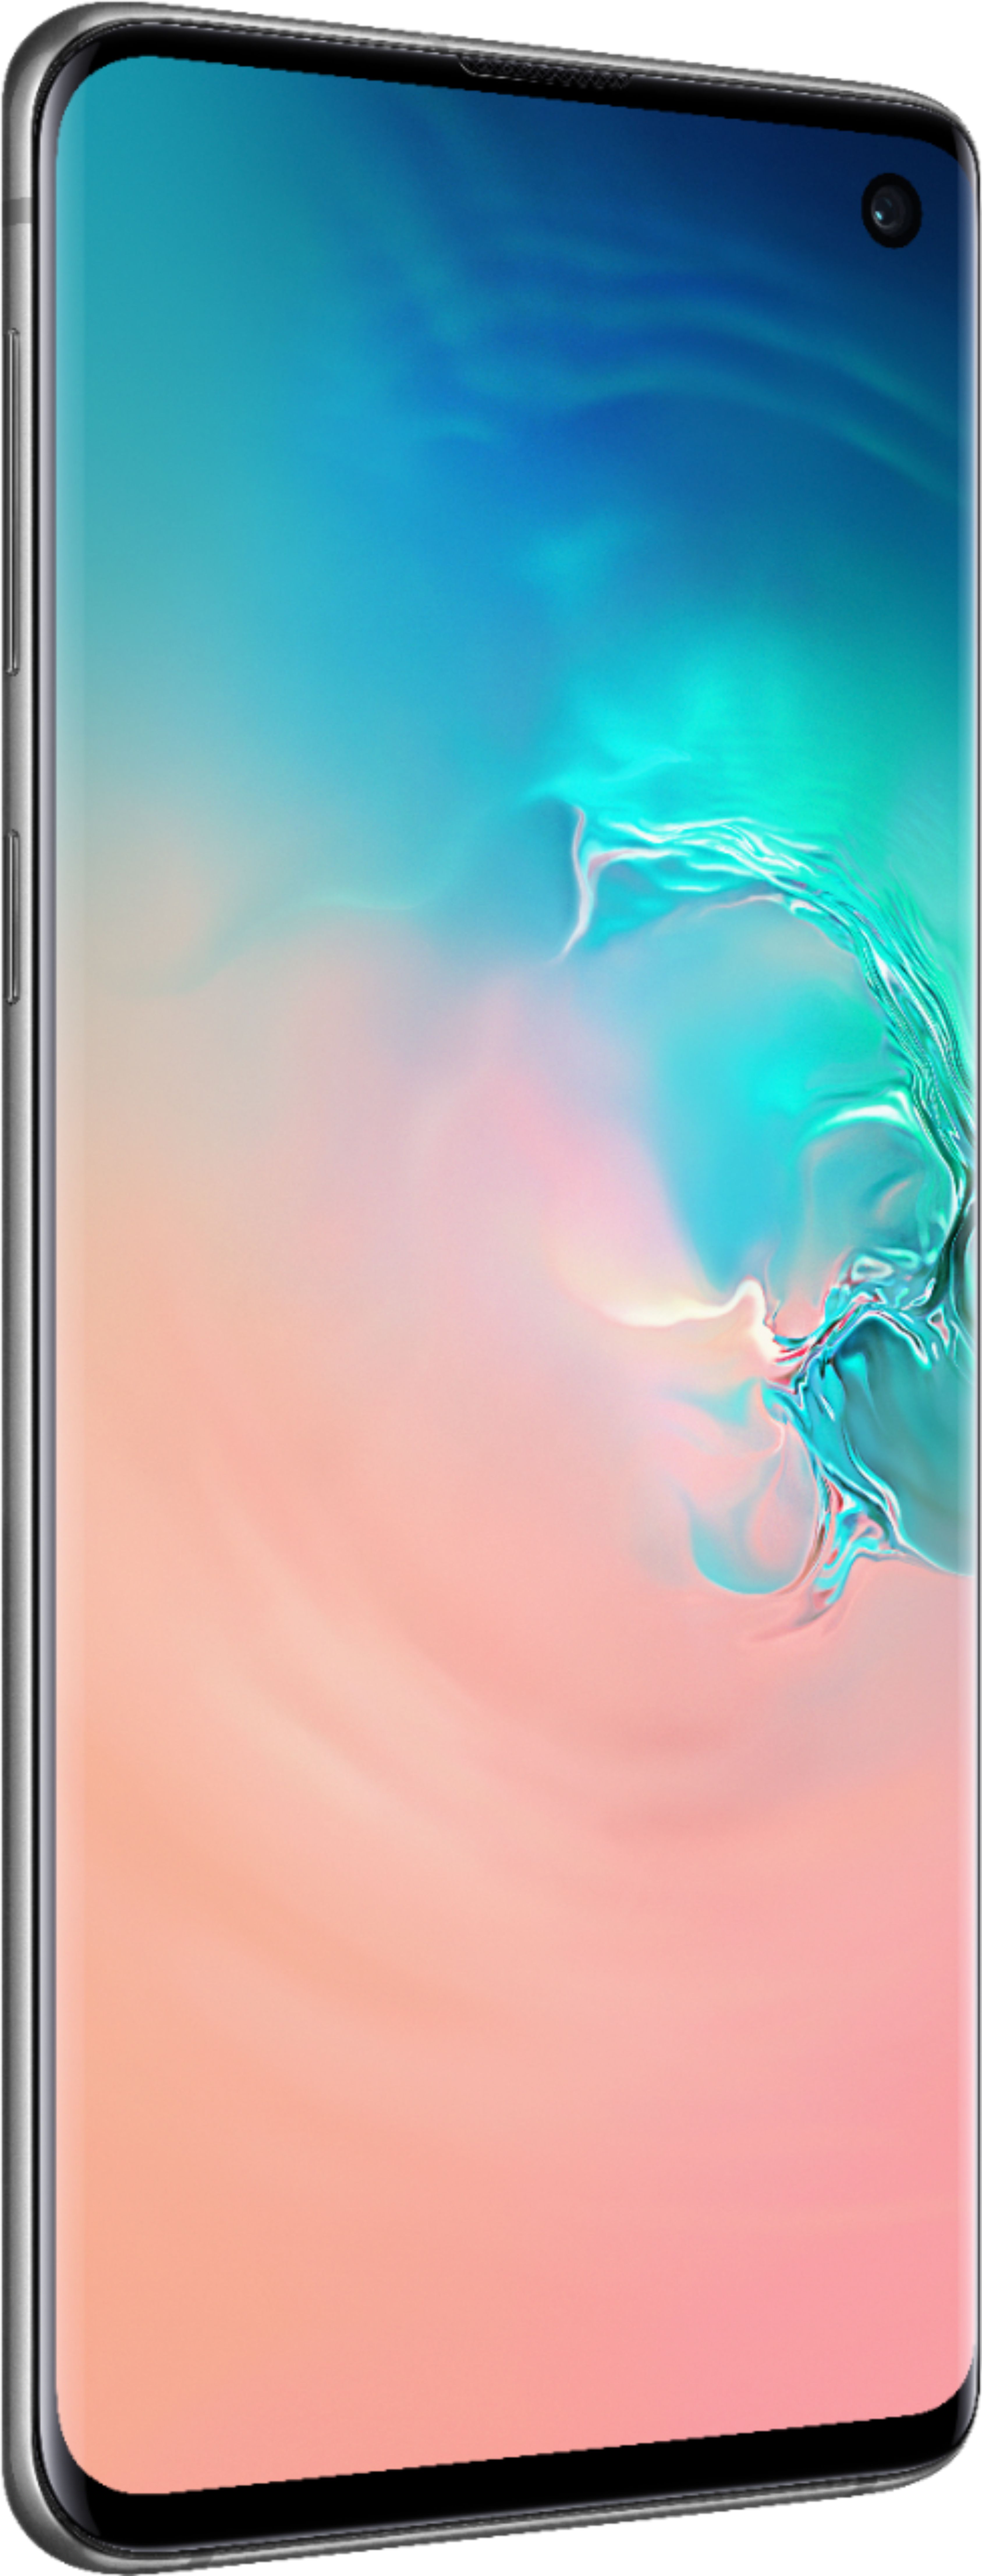 Best Buy Samsung Geek Squad Certified Refurbished Galaxy S10 With 512gb Memory Cell Phone Unlocked Prism White Gsrf Sm G973uzwexaa